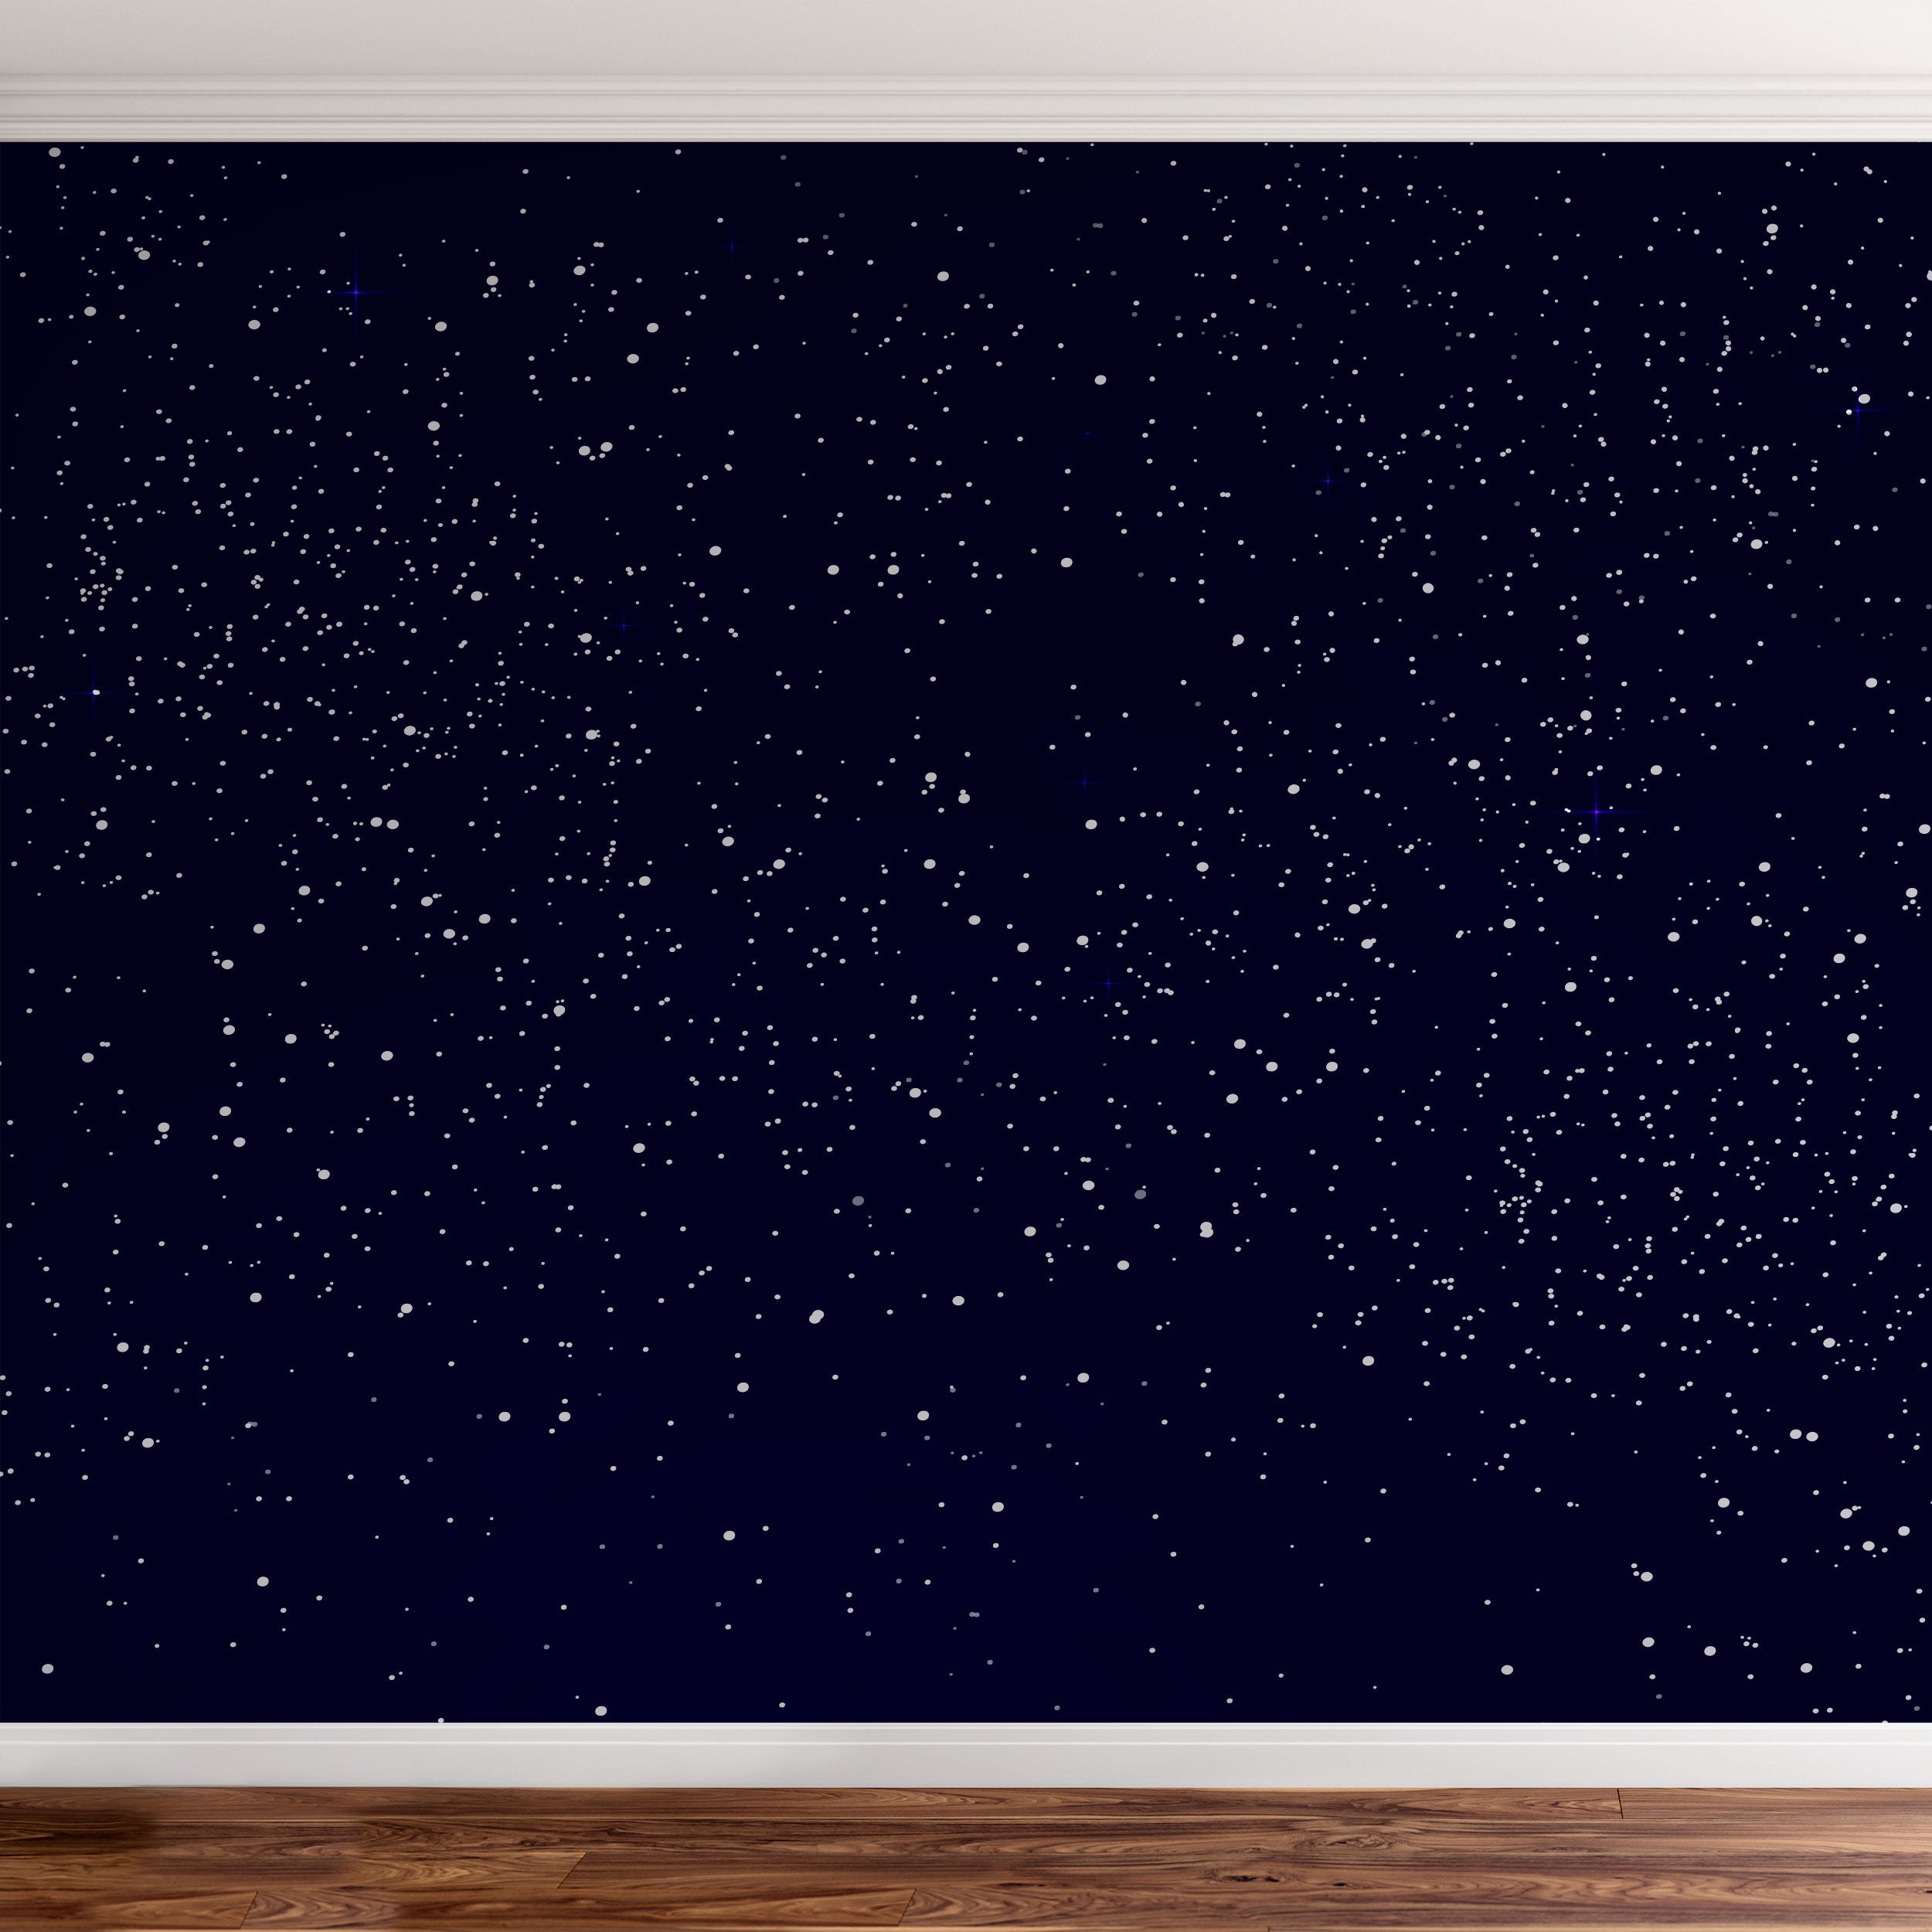 Space wallpaper